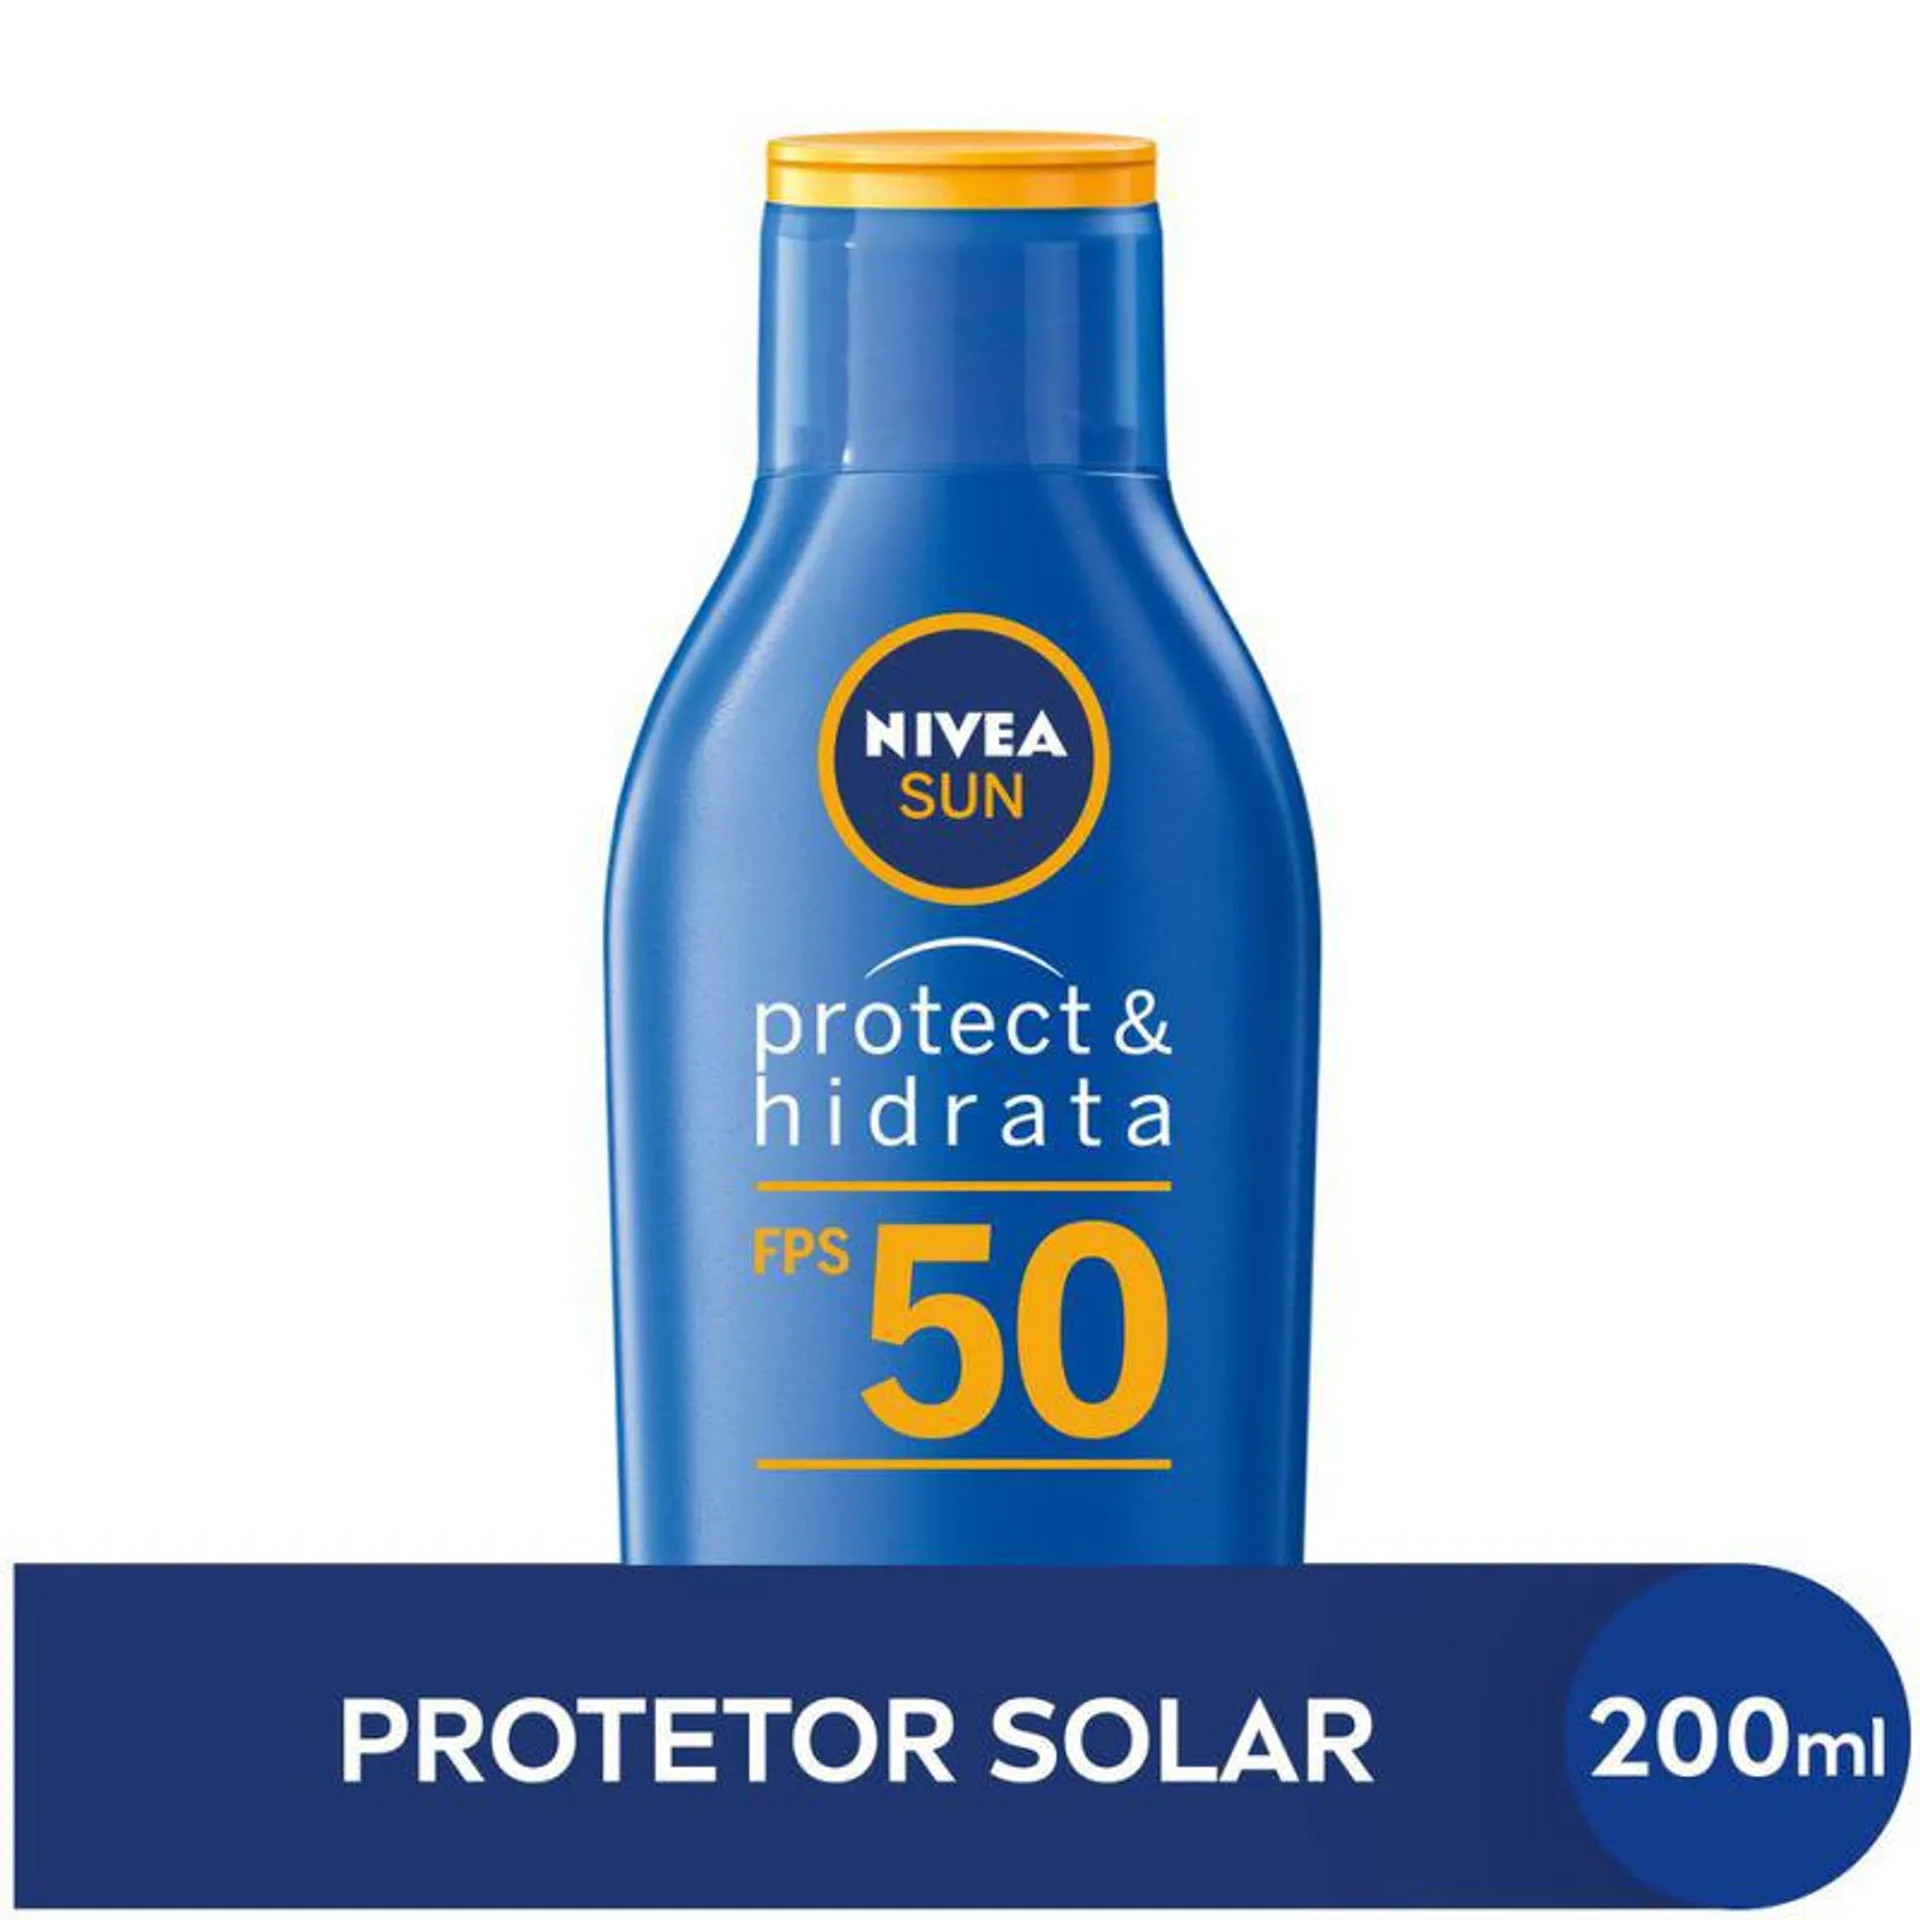 Protetor Solar Nivea Sun Protect & Hidrata - FPS50 - 200ml